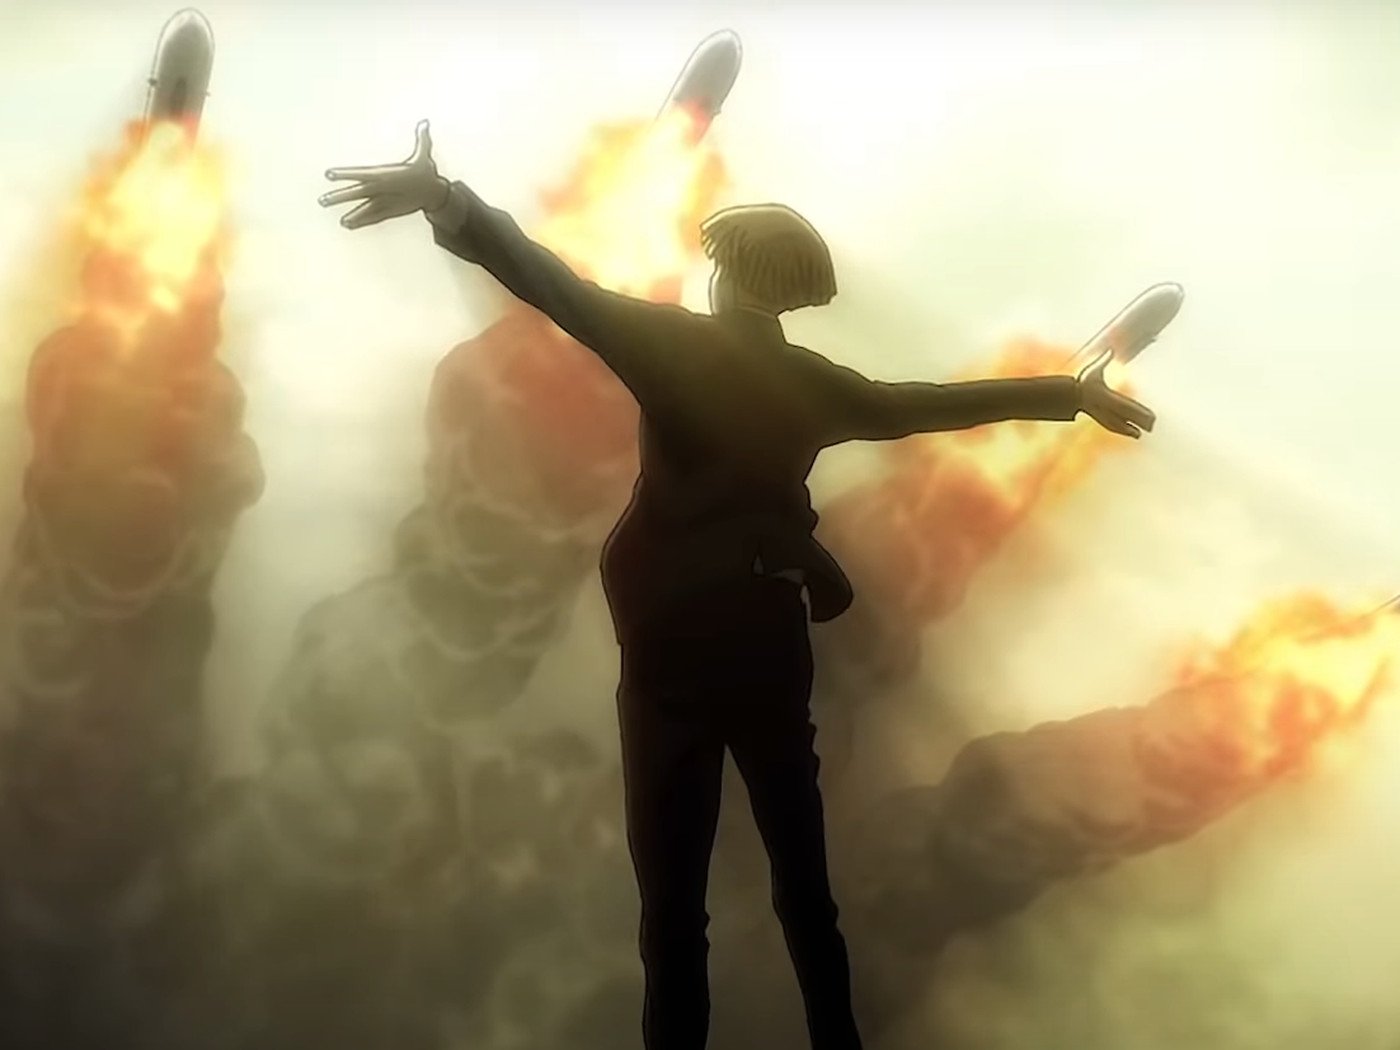 Attack on Titan Final Season Part 2 trailer reveals 2022 release date